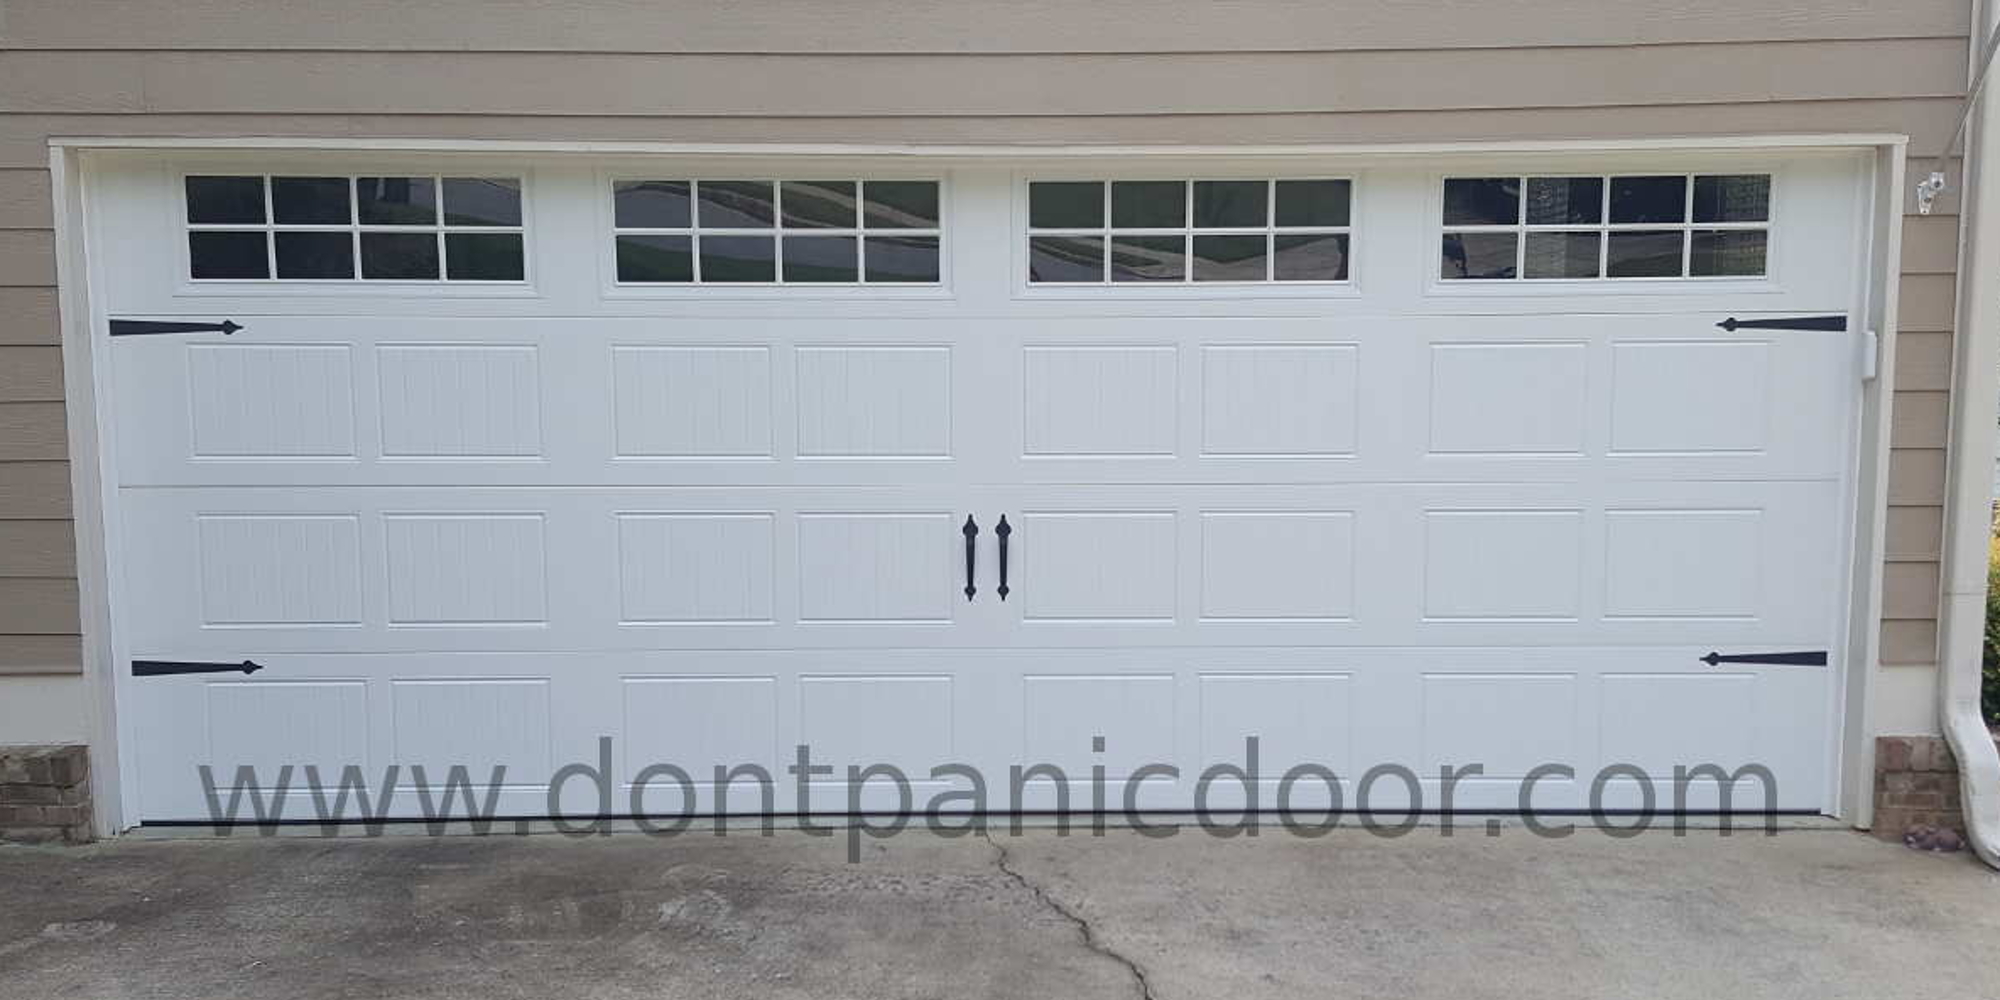 18 Best Reconnect garage door after emergency release for Renovation